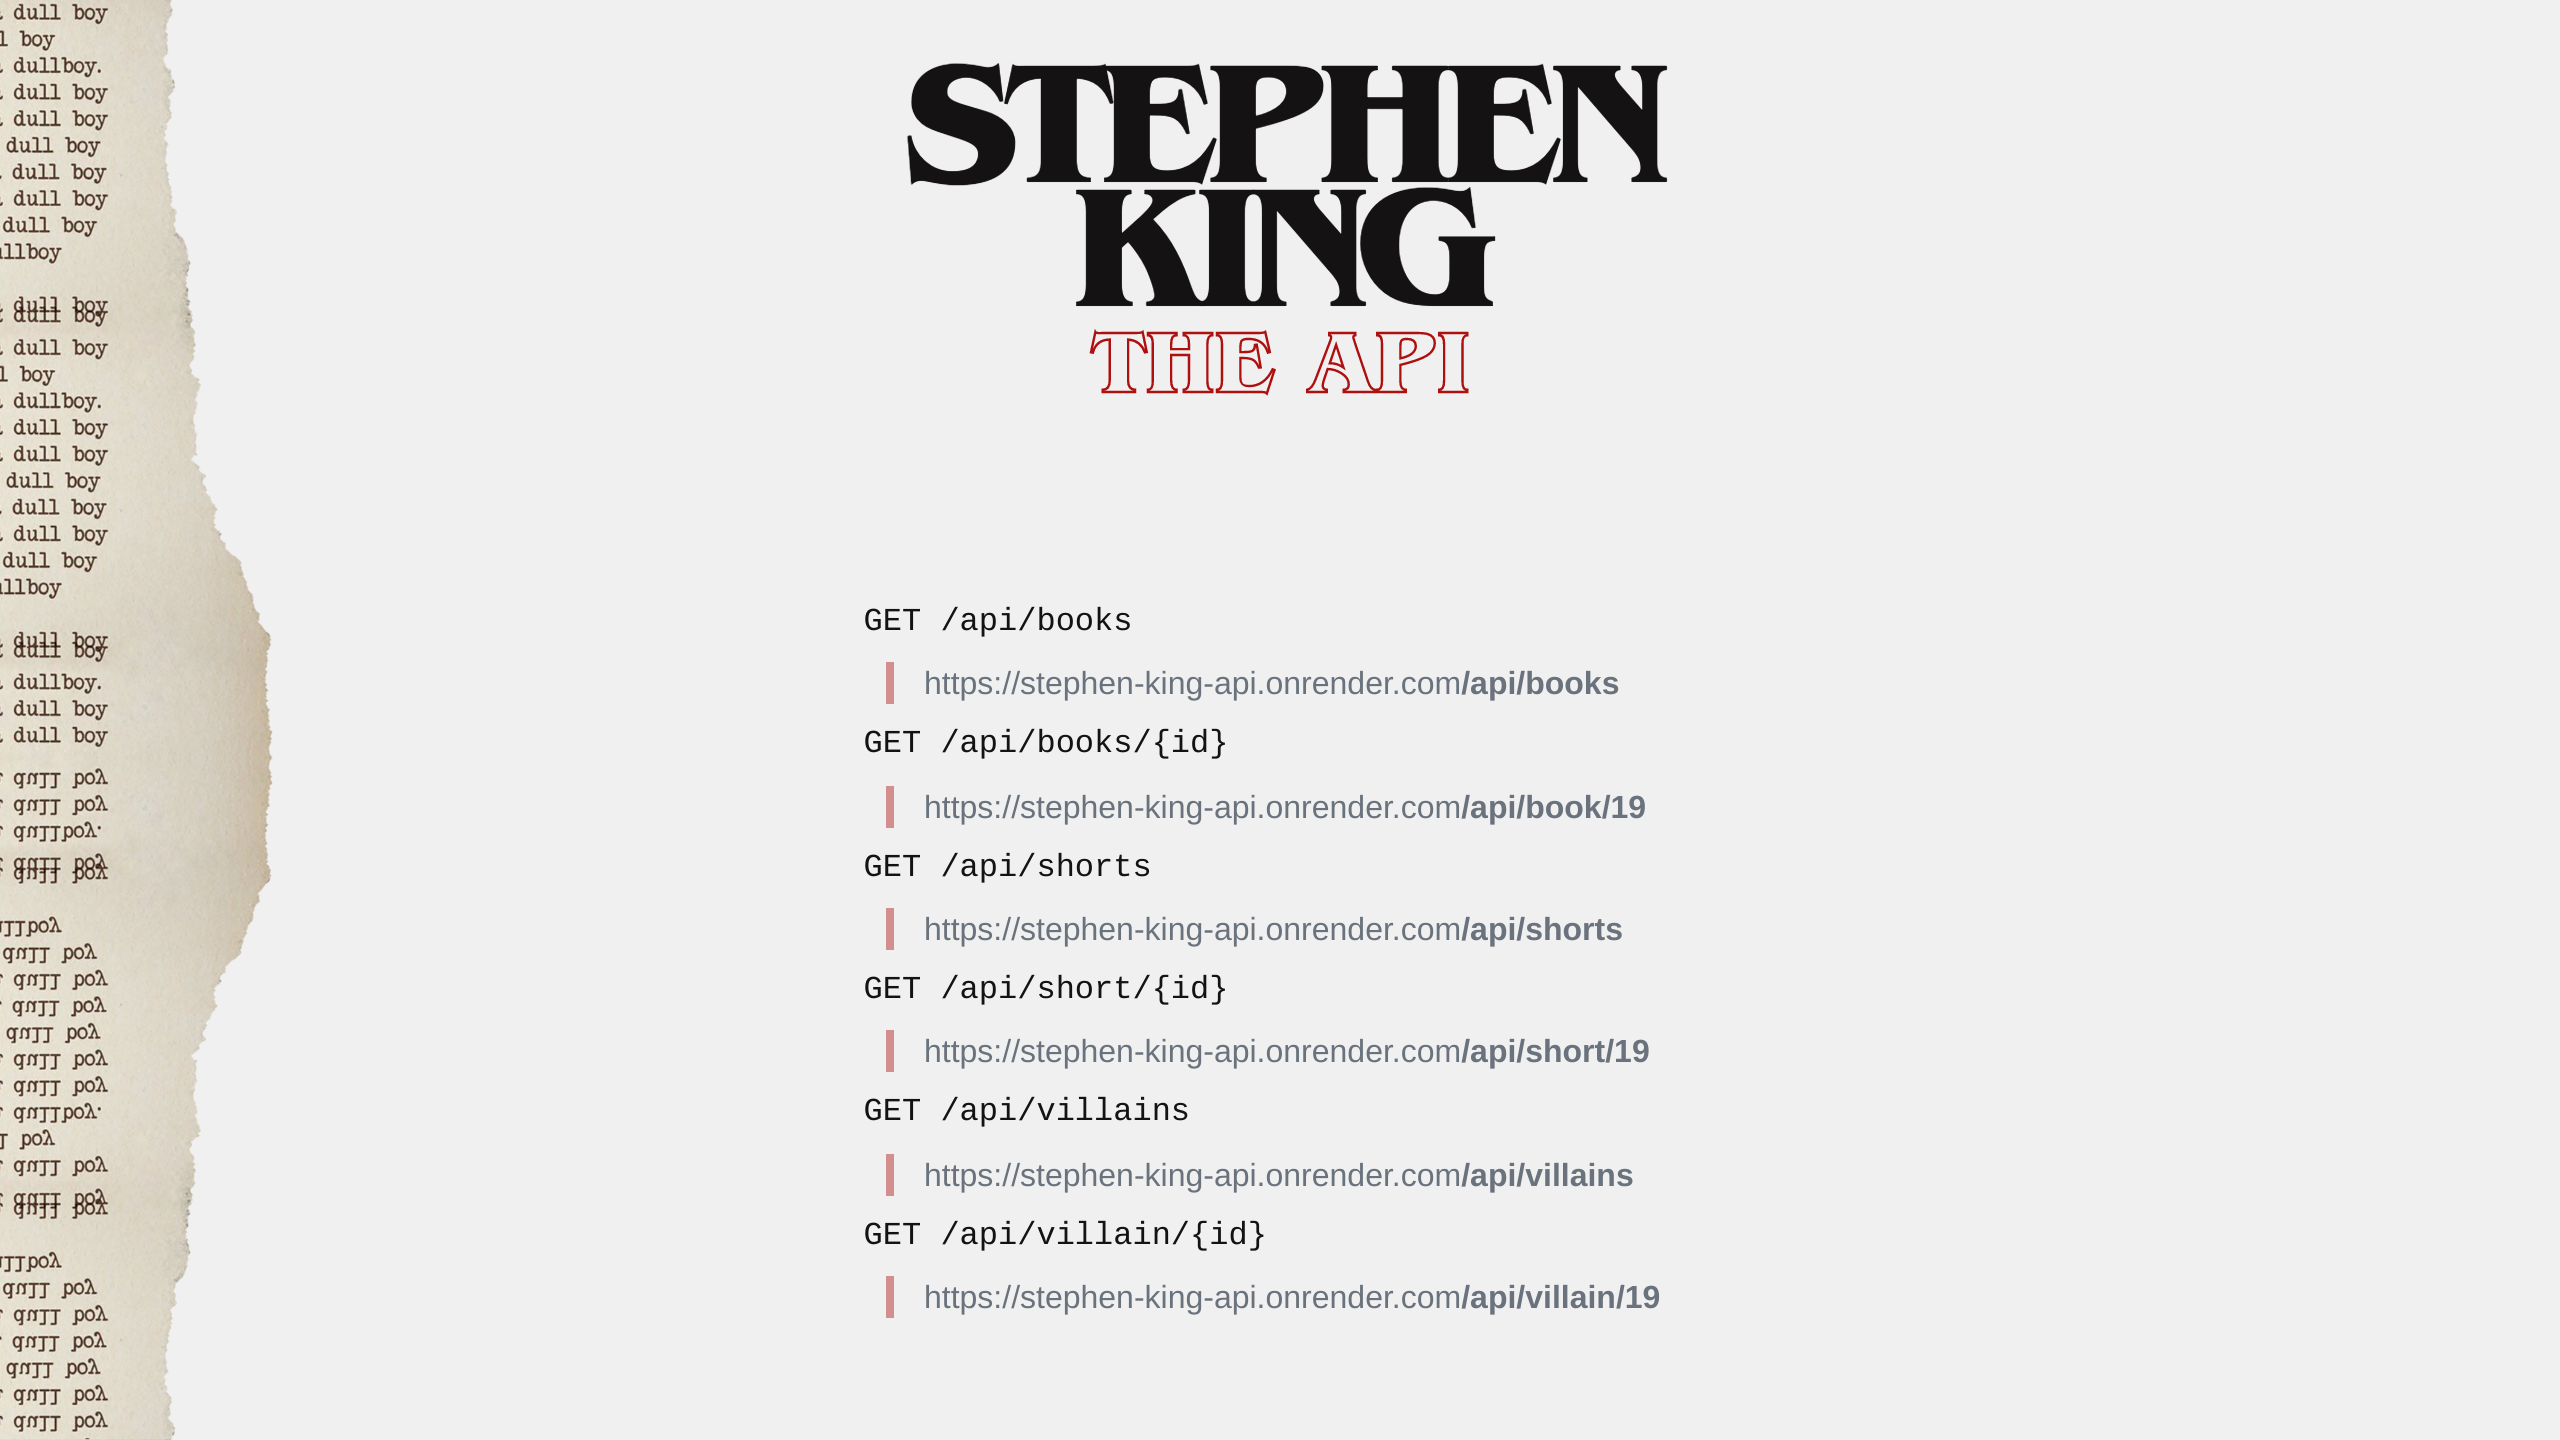 Stephen King's website screenshot